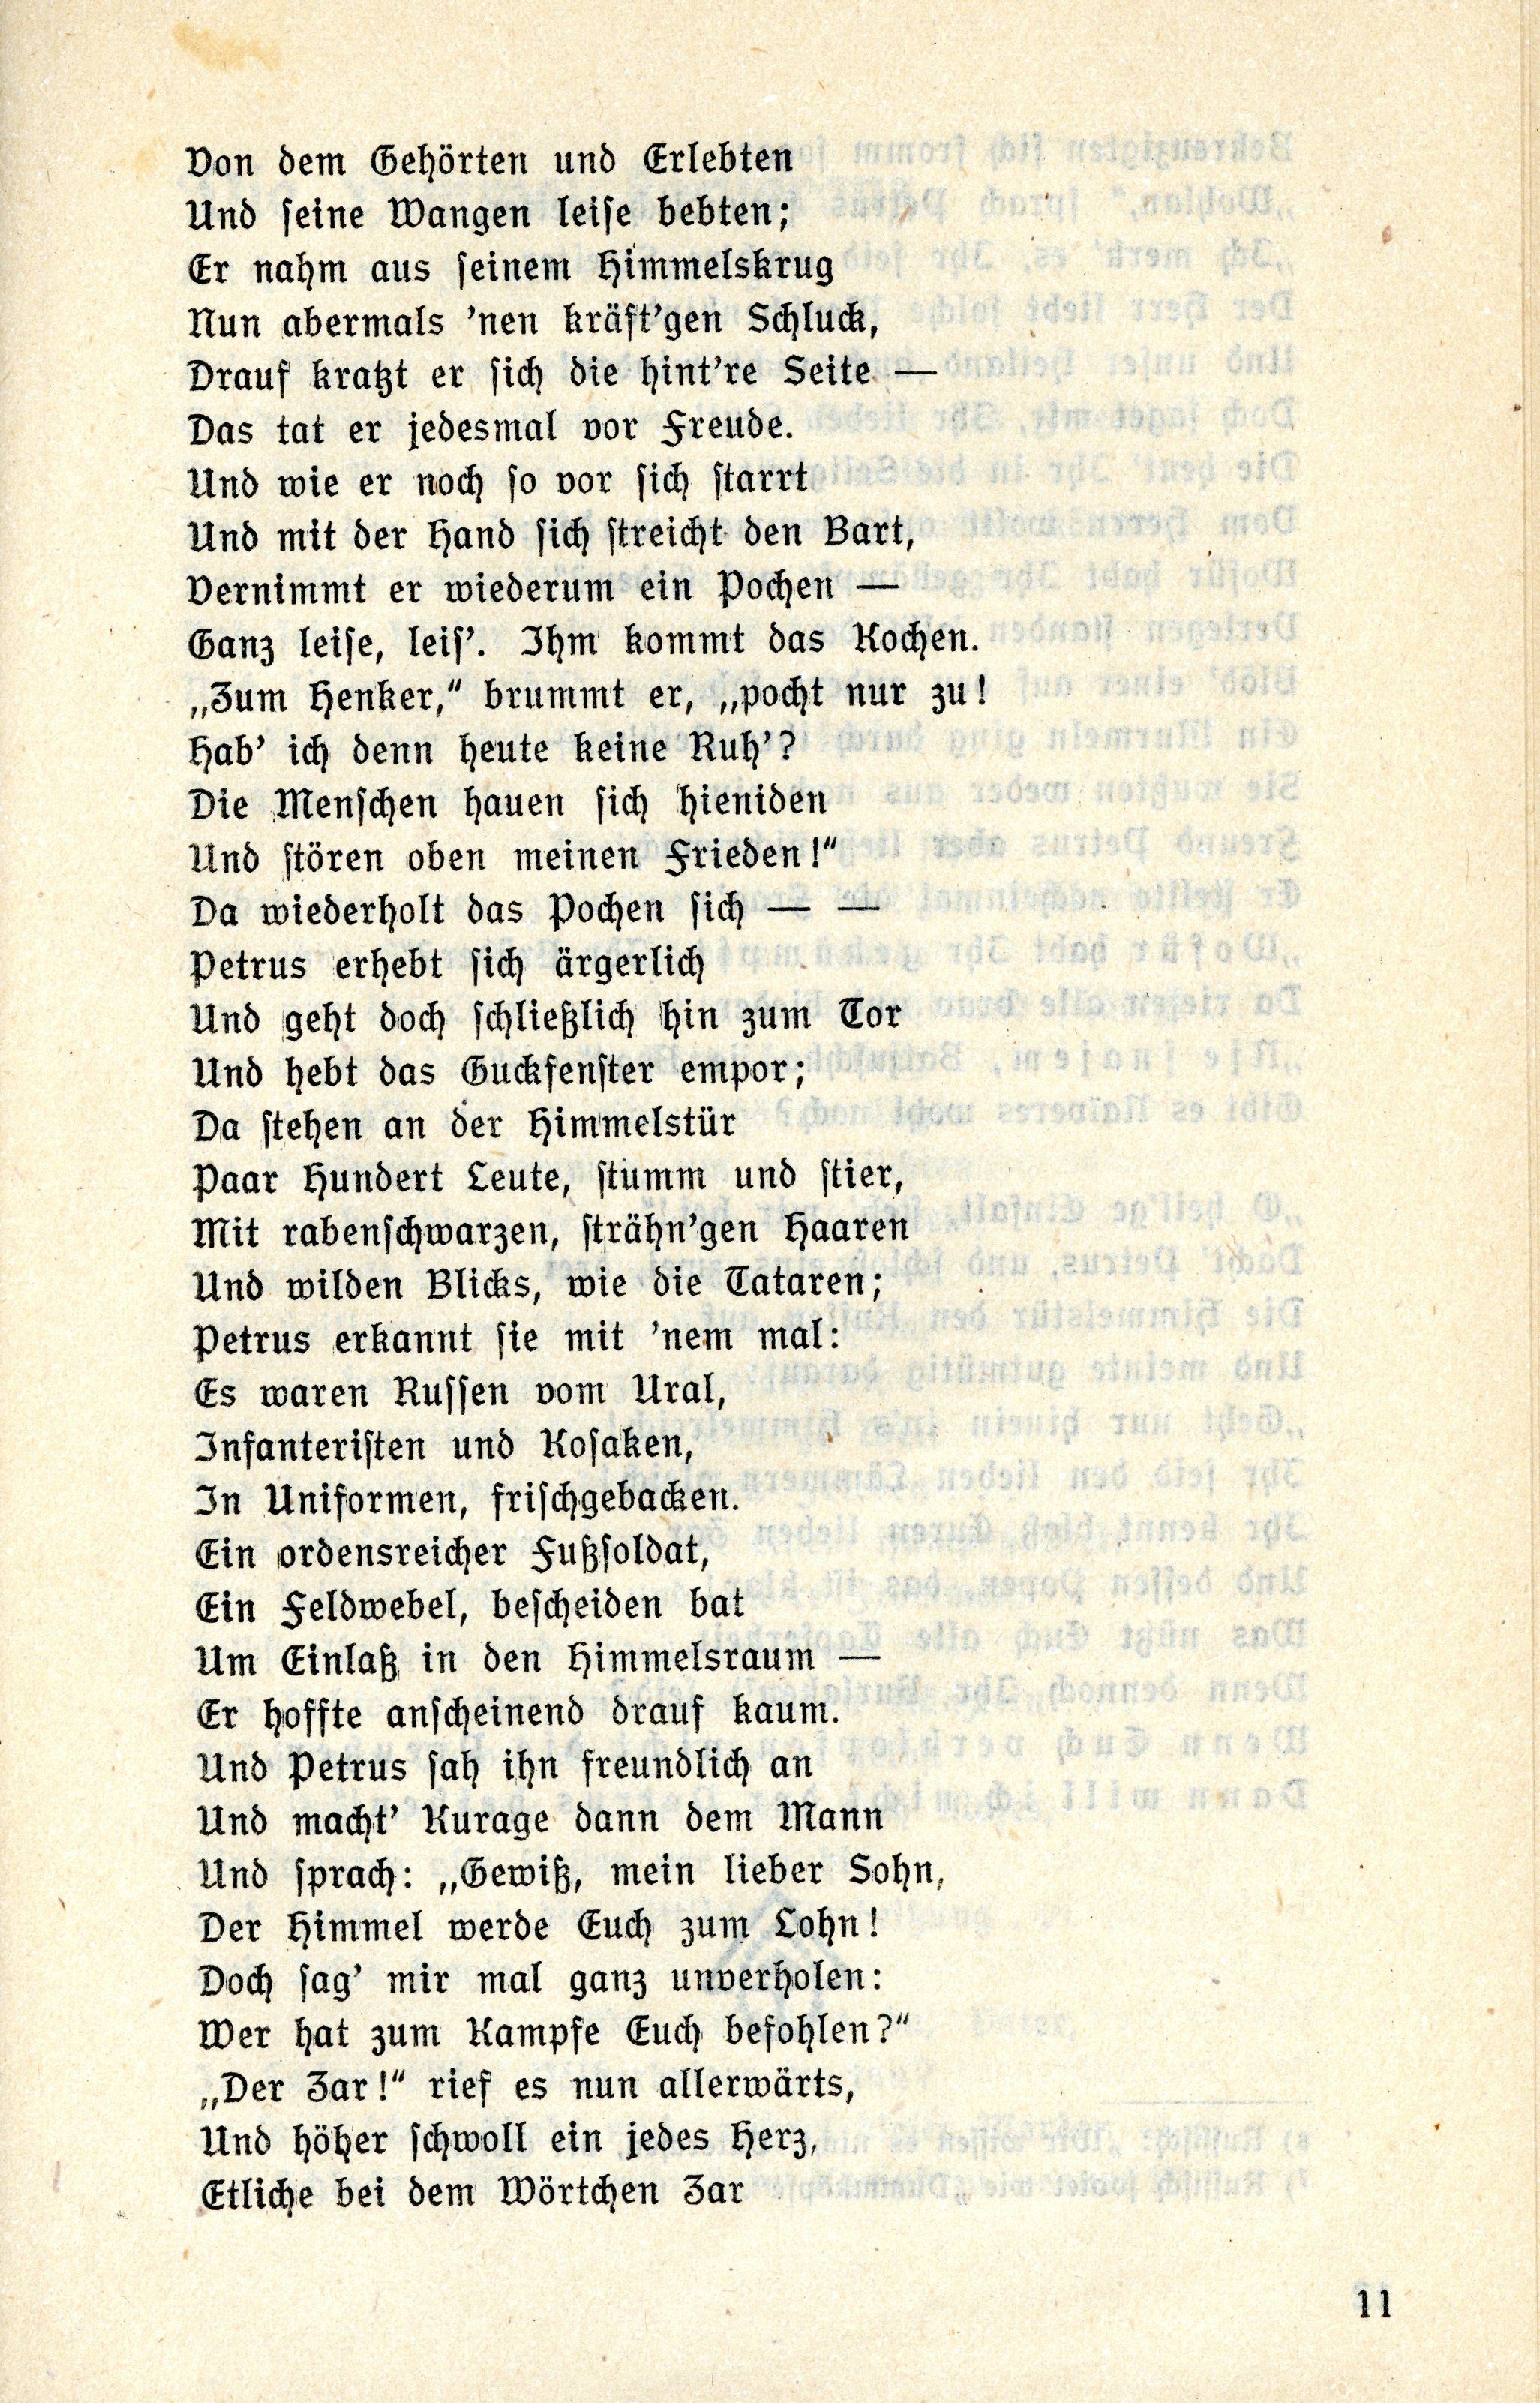 Der Balte im Maulkorb (1917) | 12. (11) Main body of text